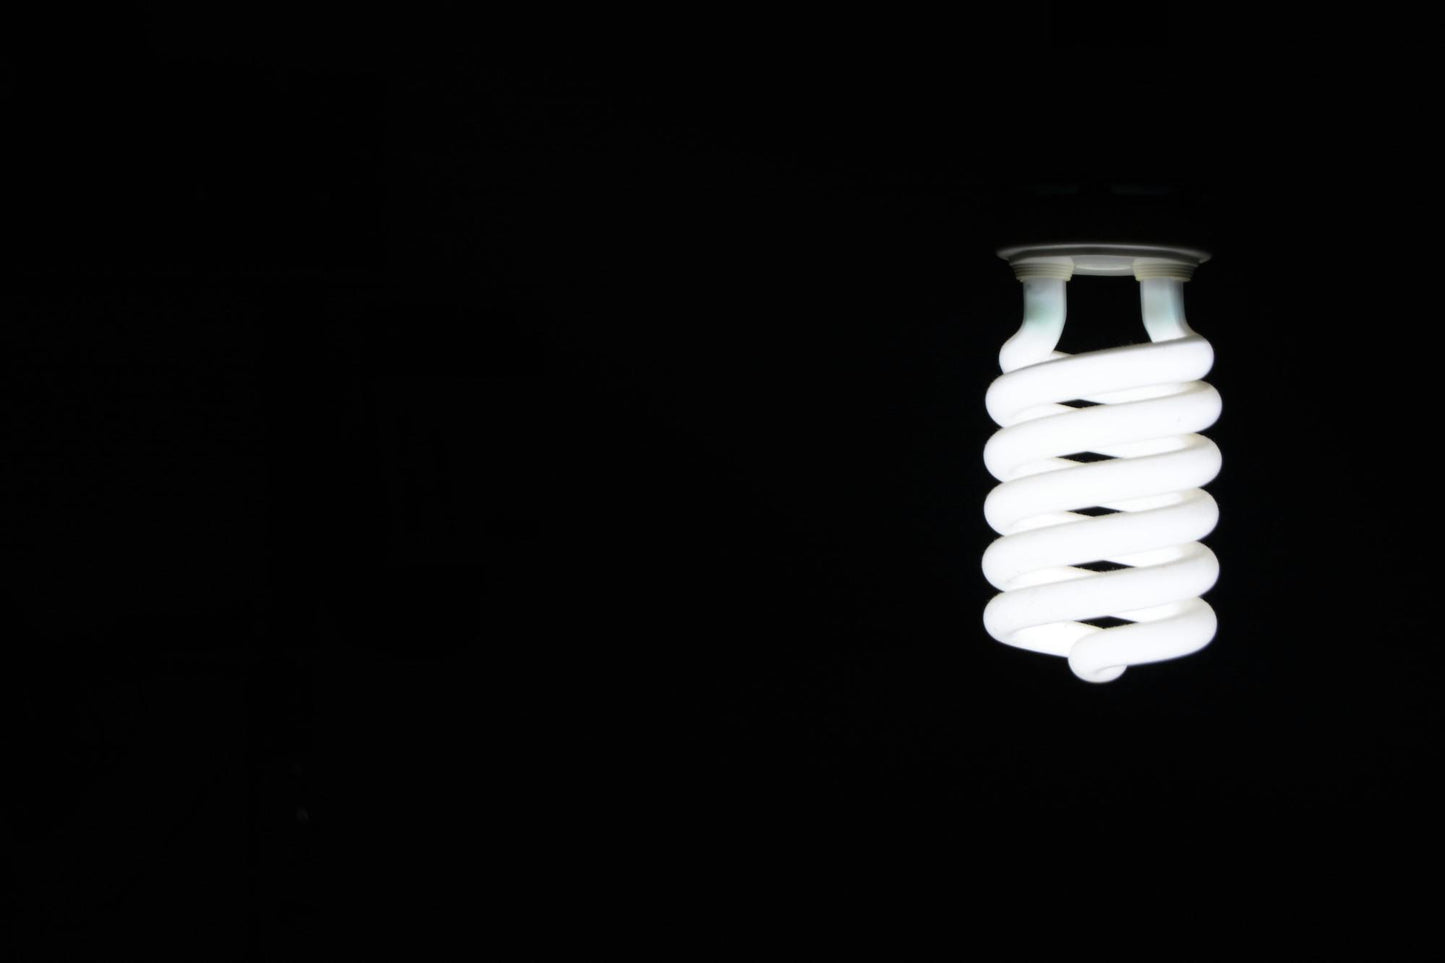 led light bulb on black background